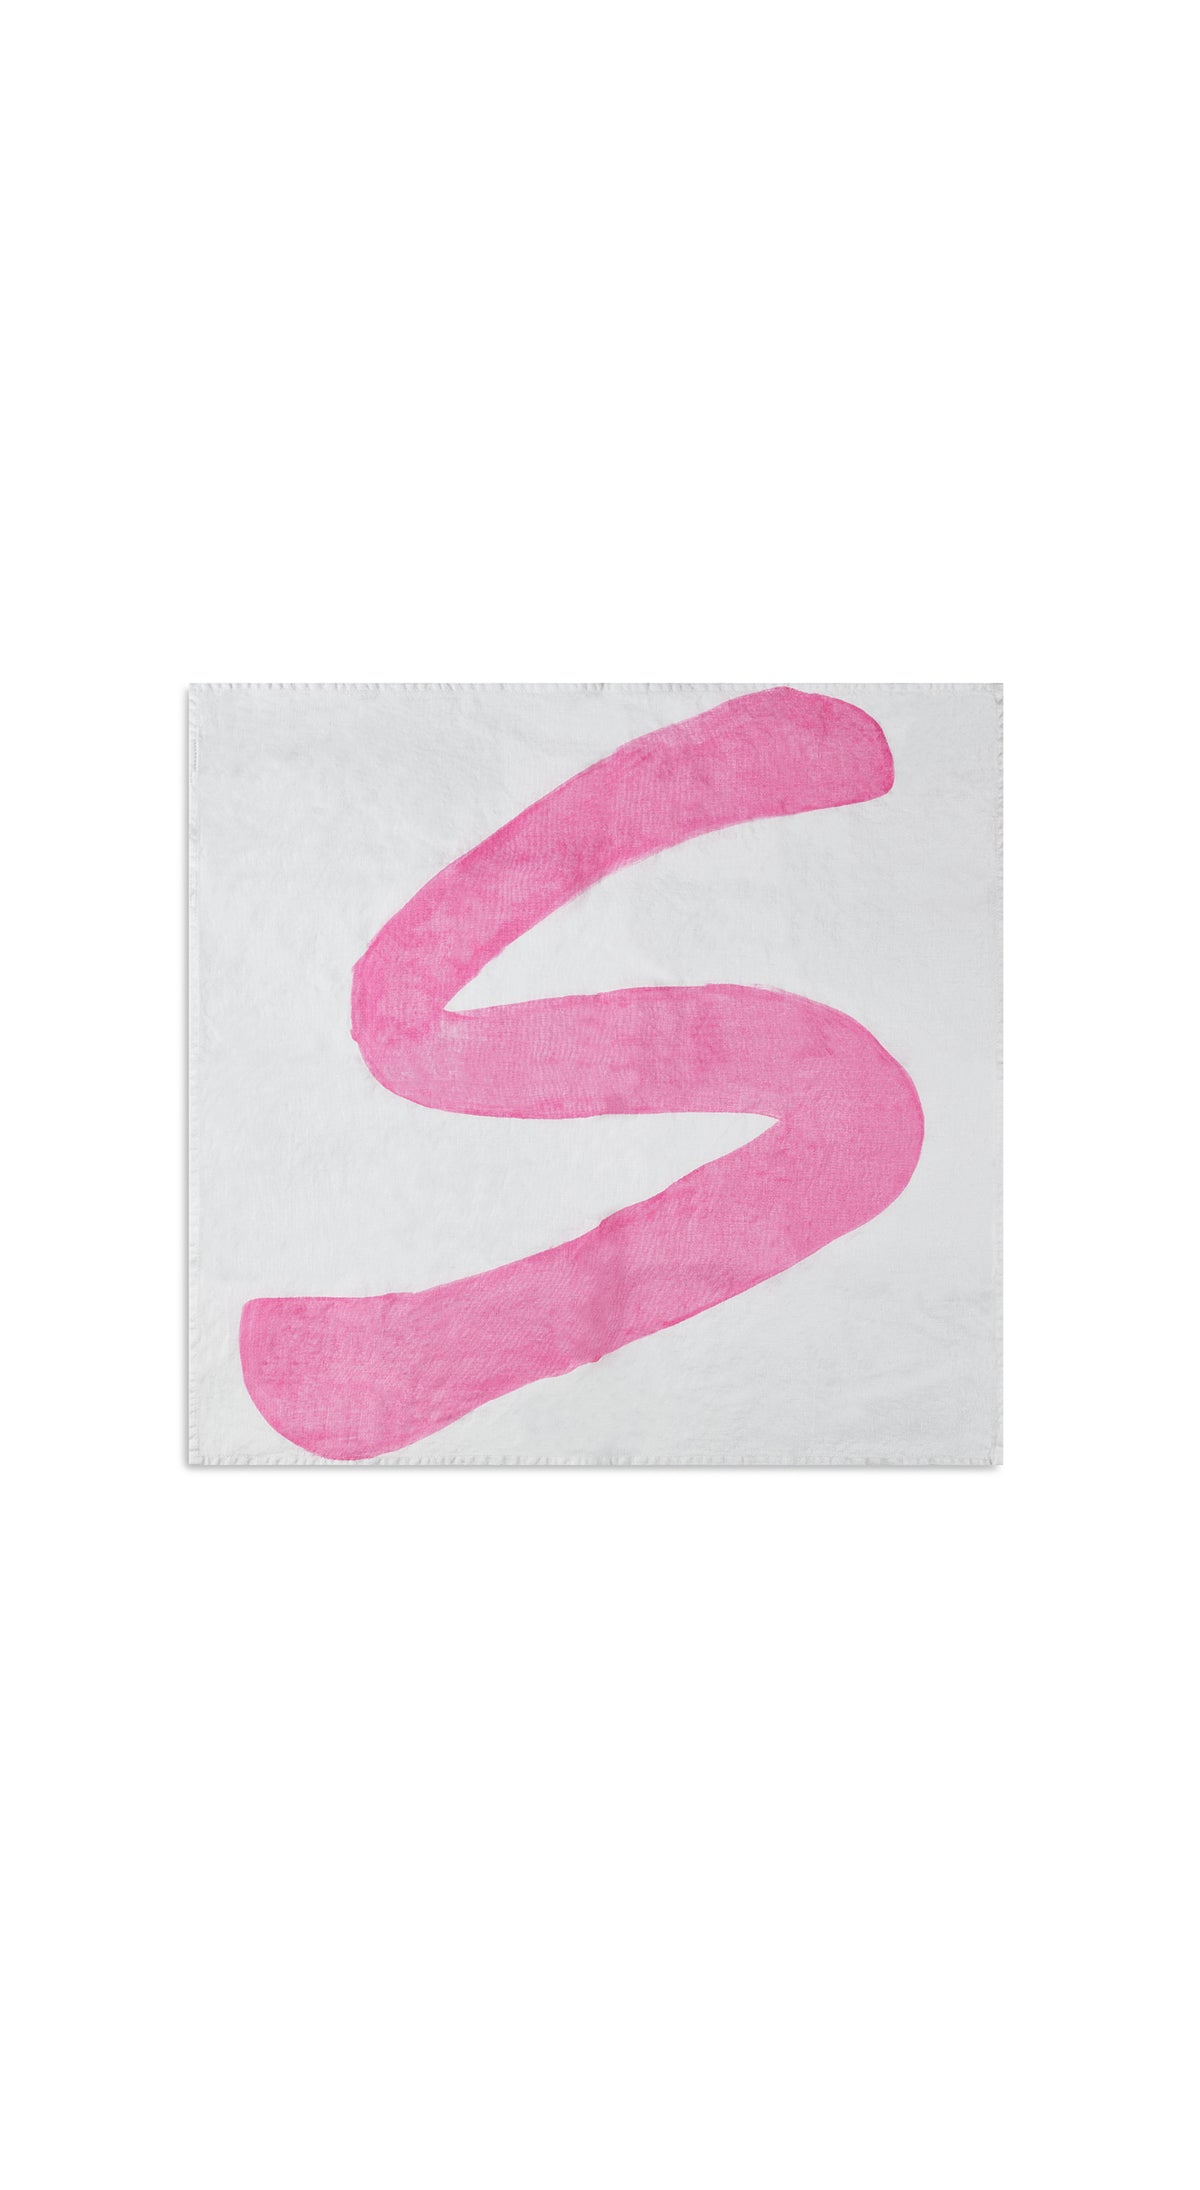 Alphabet Napkin 'S' in Rose Pink, 50x50cm